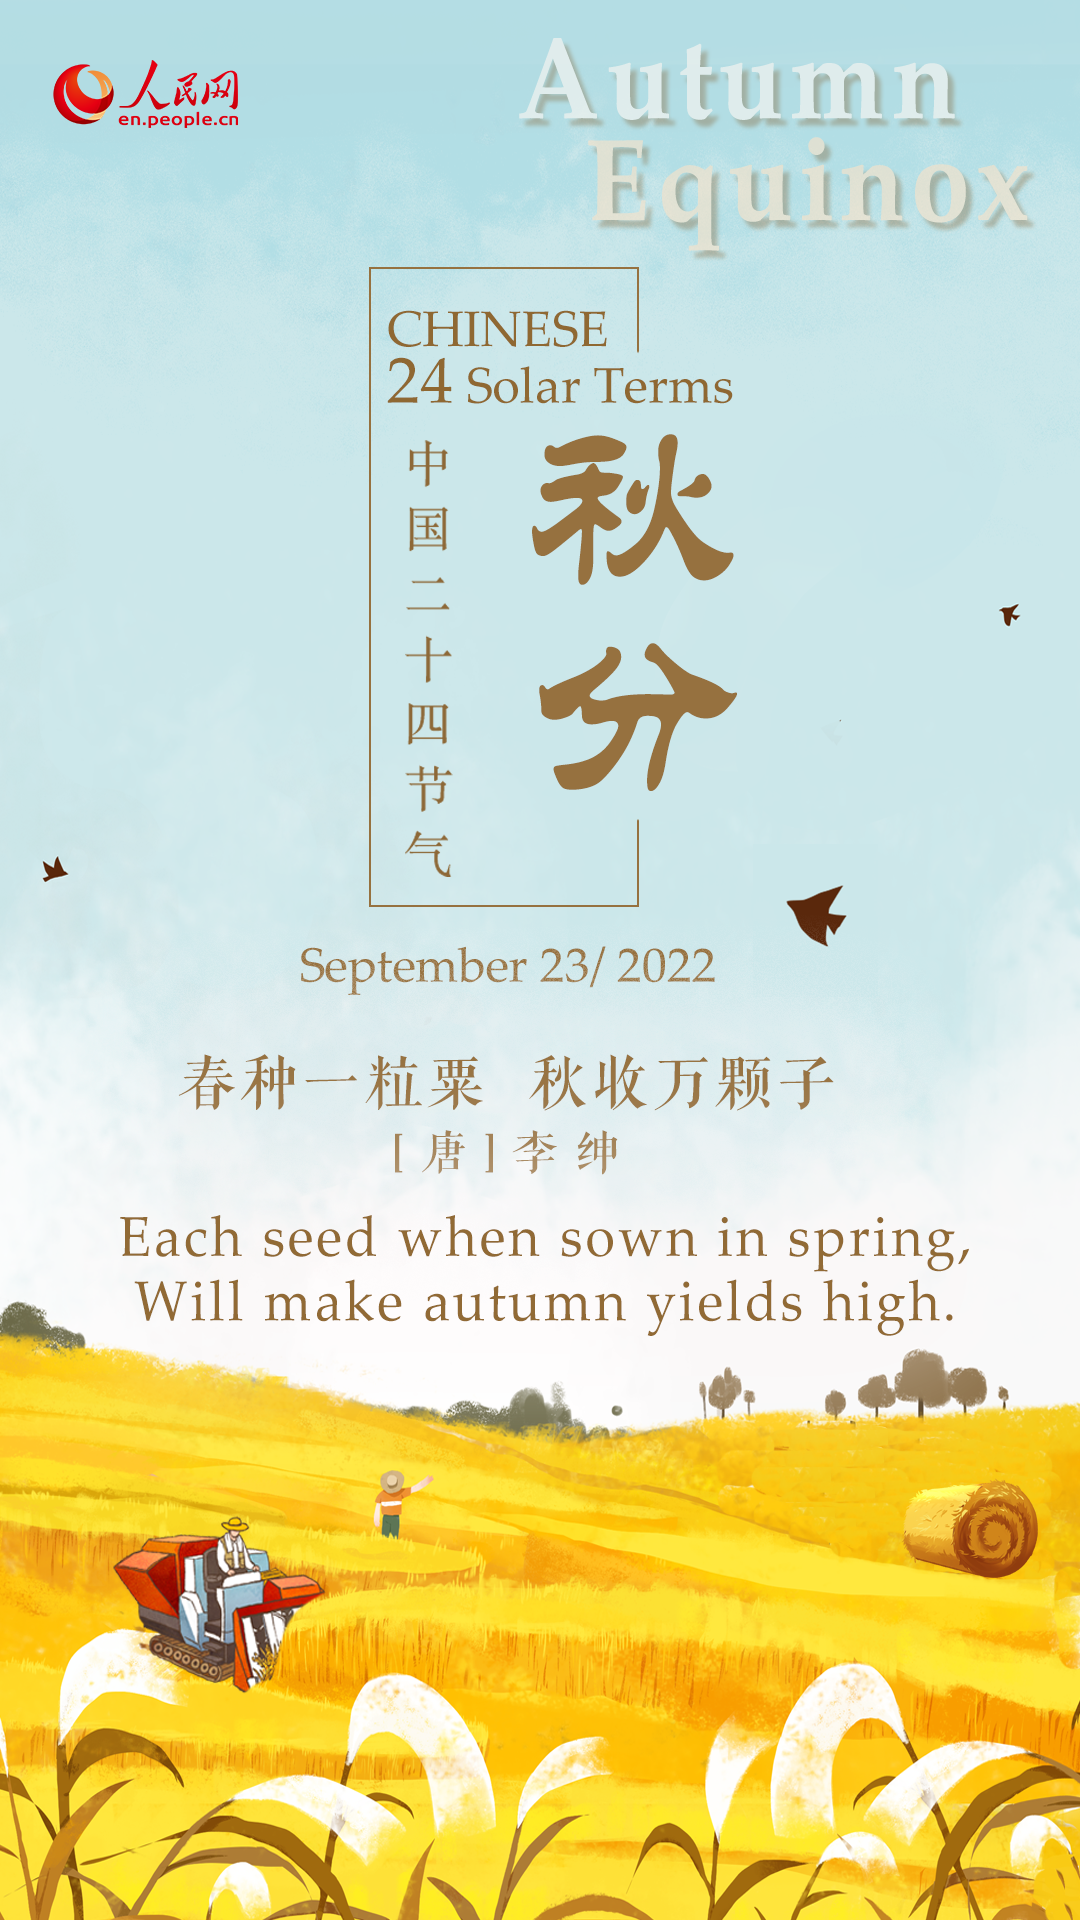 Calendar for Chinese 24 Solar Terms: Autumn Equinox